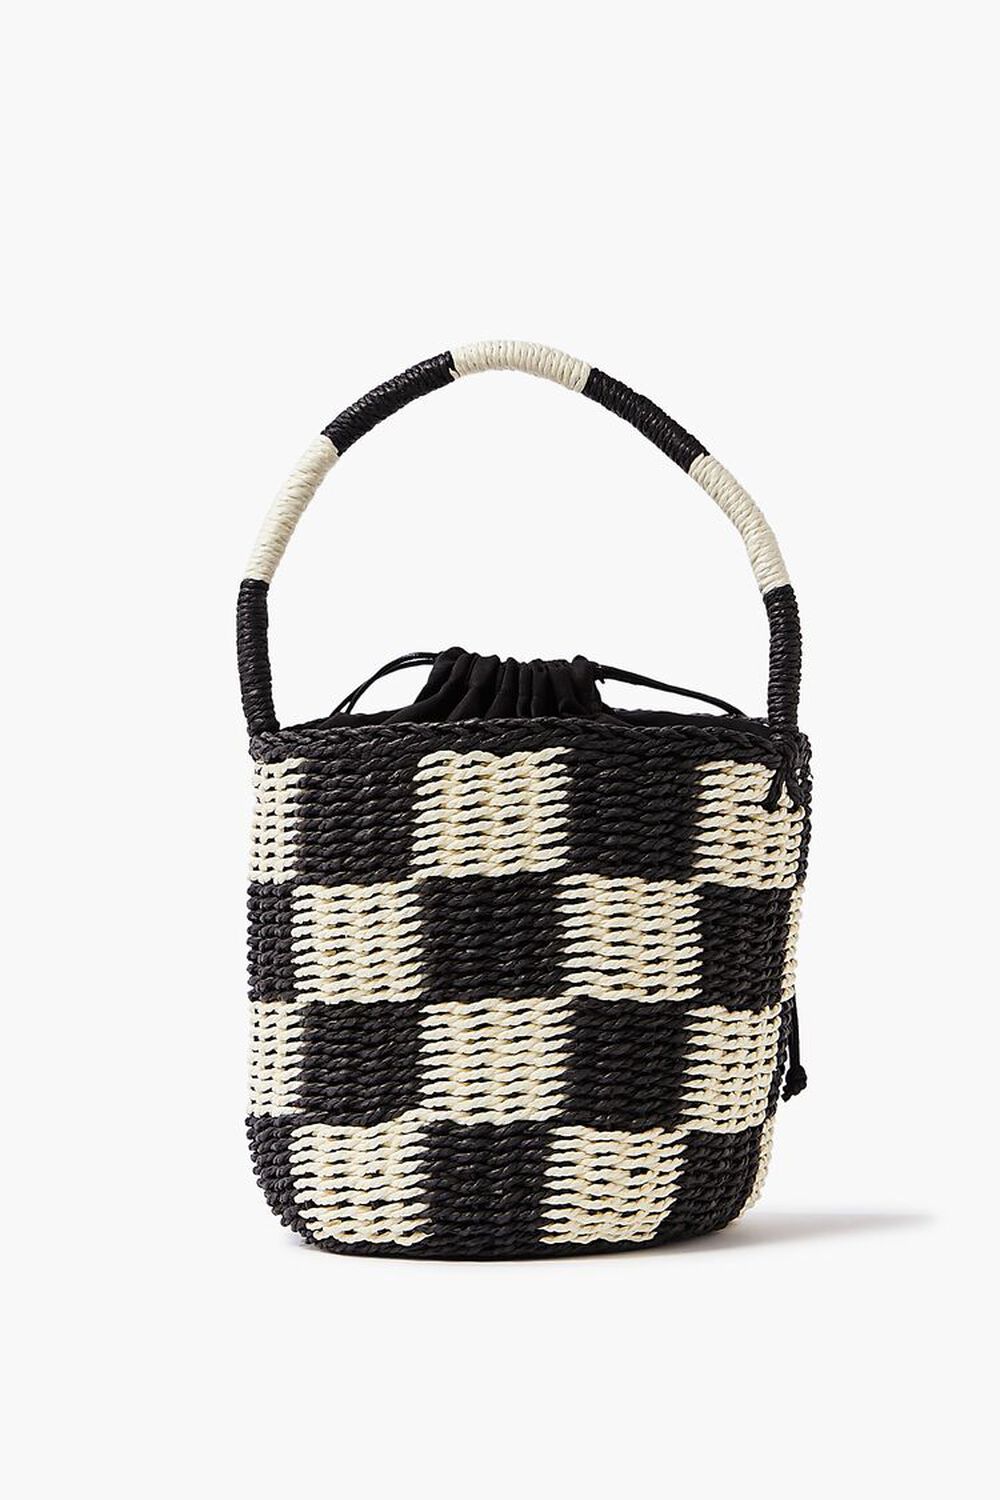 Checkered Straw Tote Bag, image 2